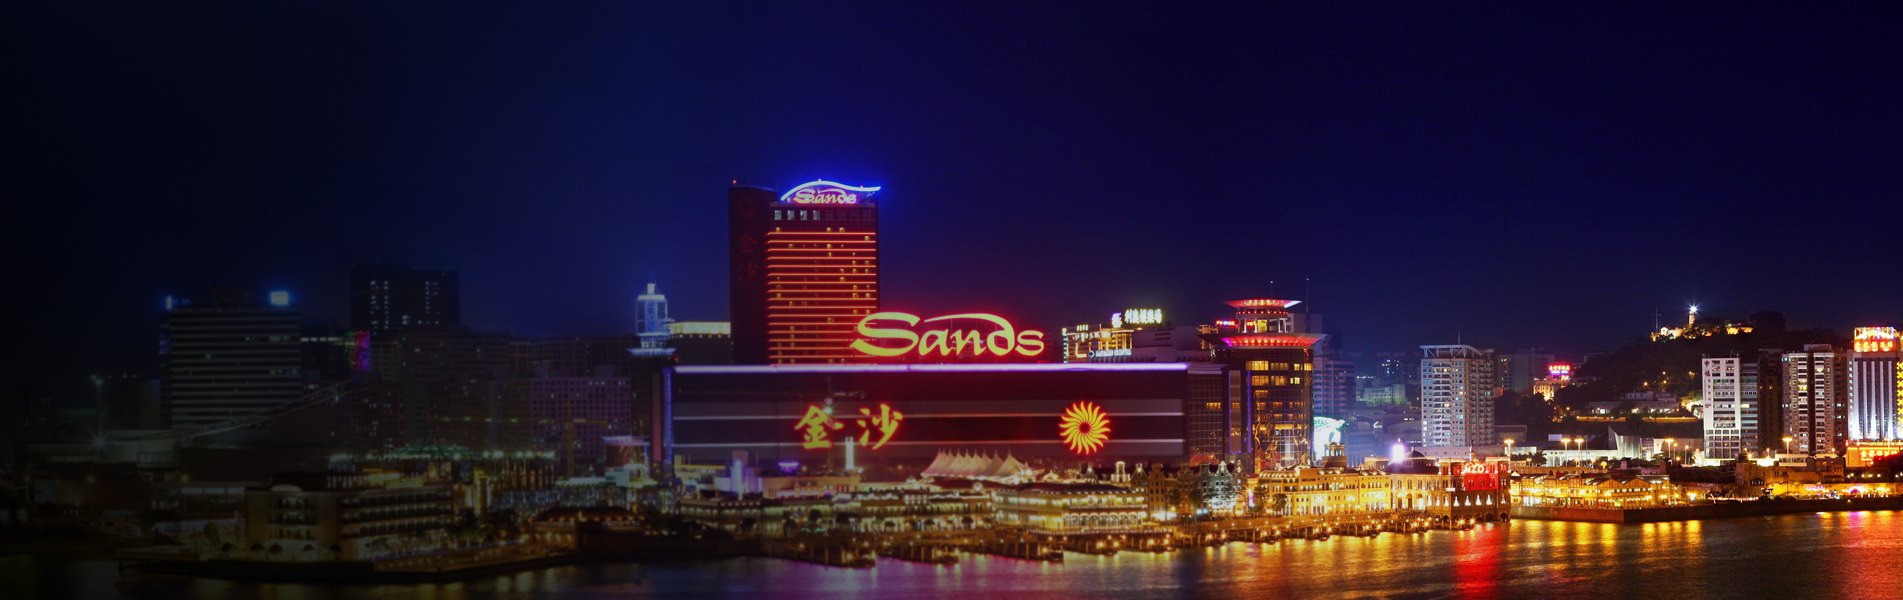 Sands Macao Casino 1